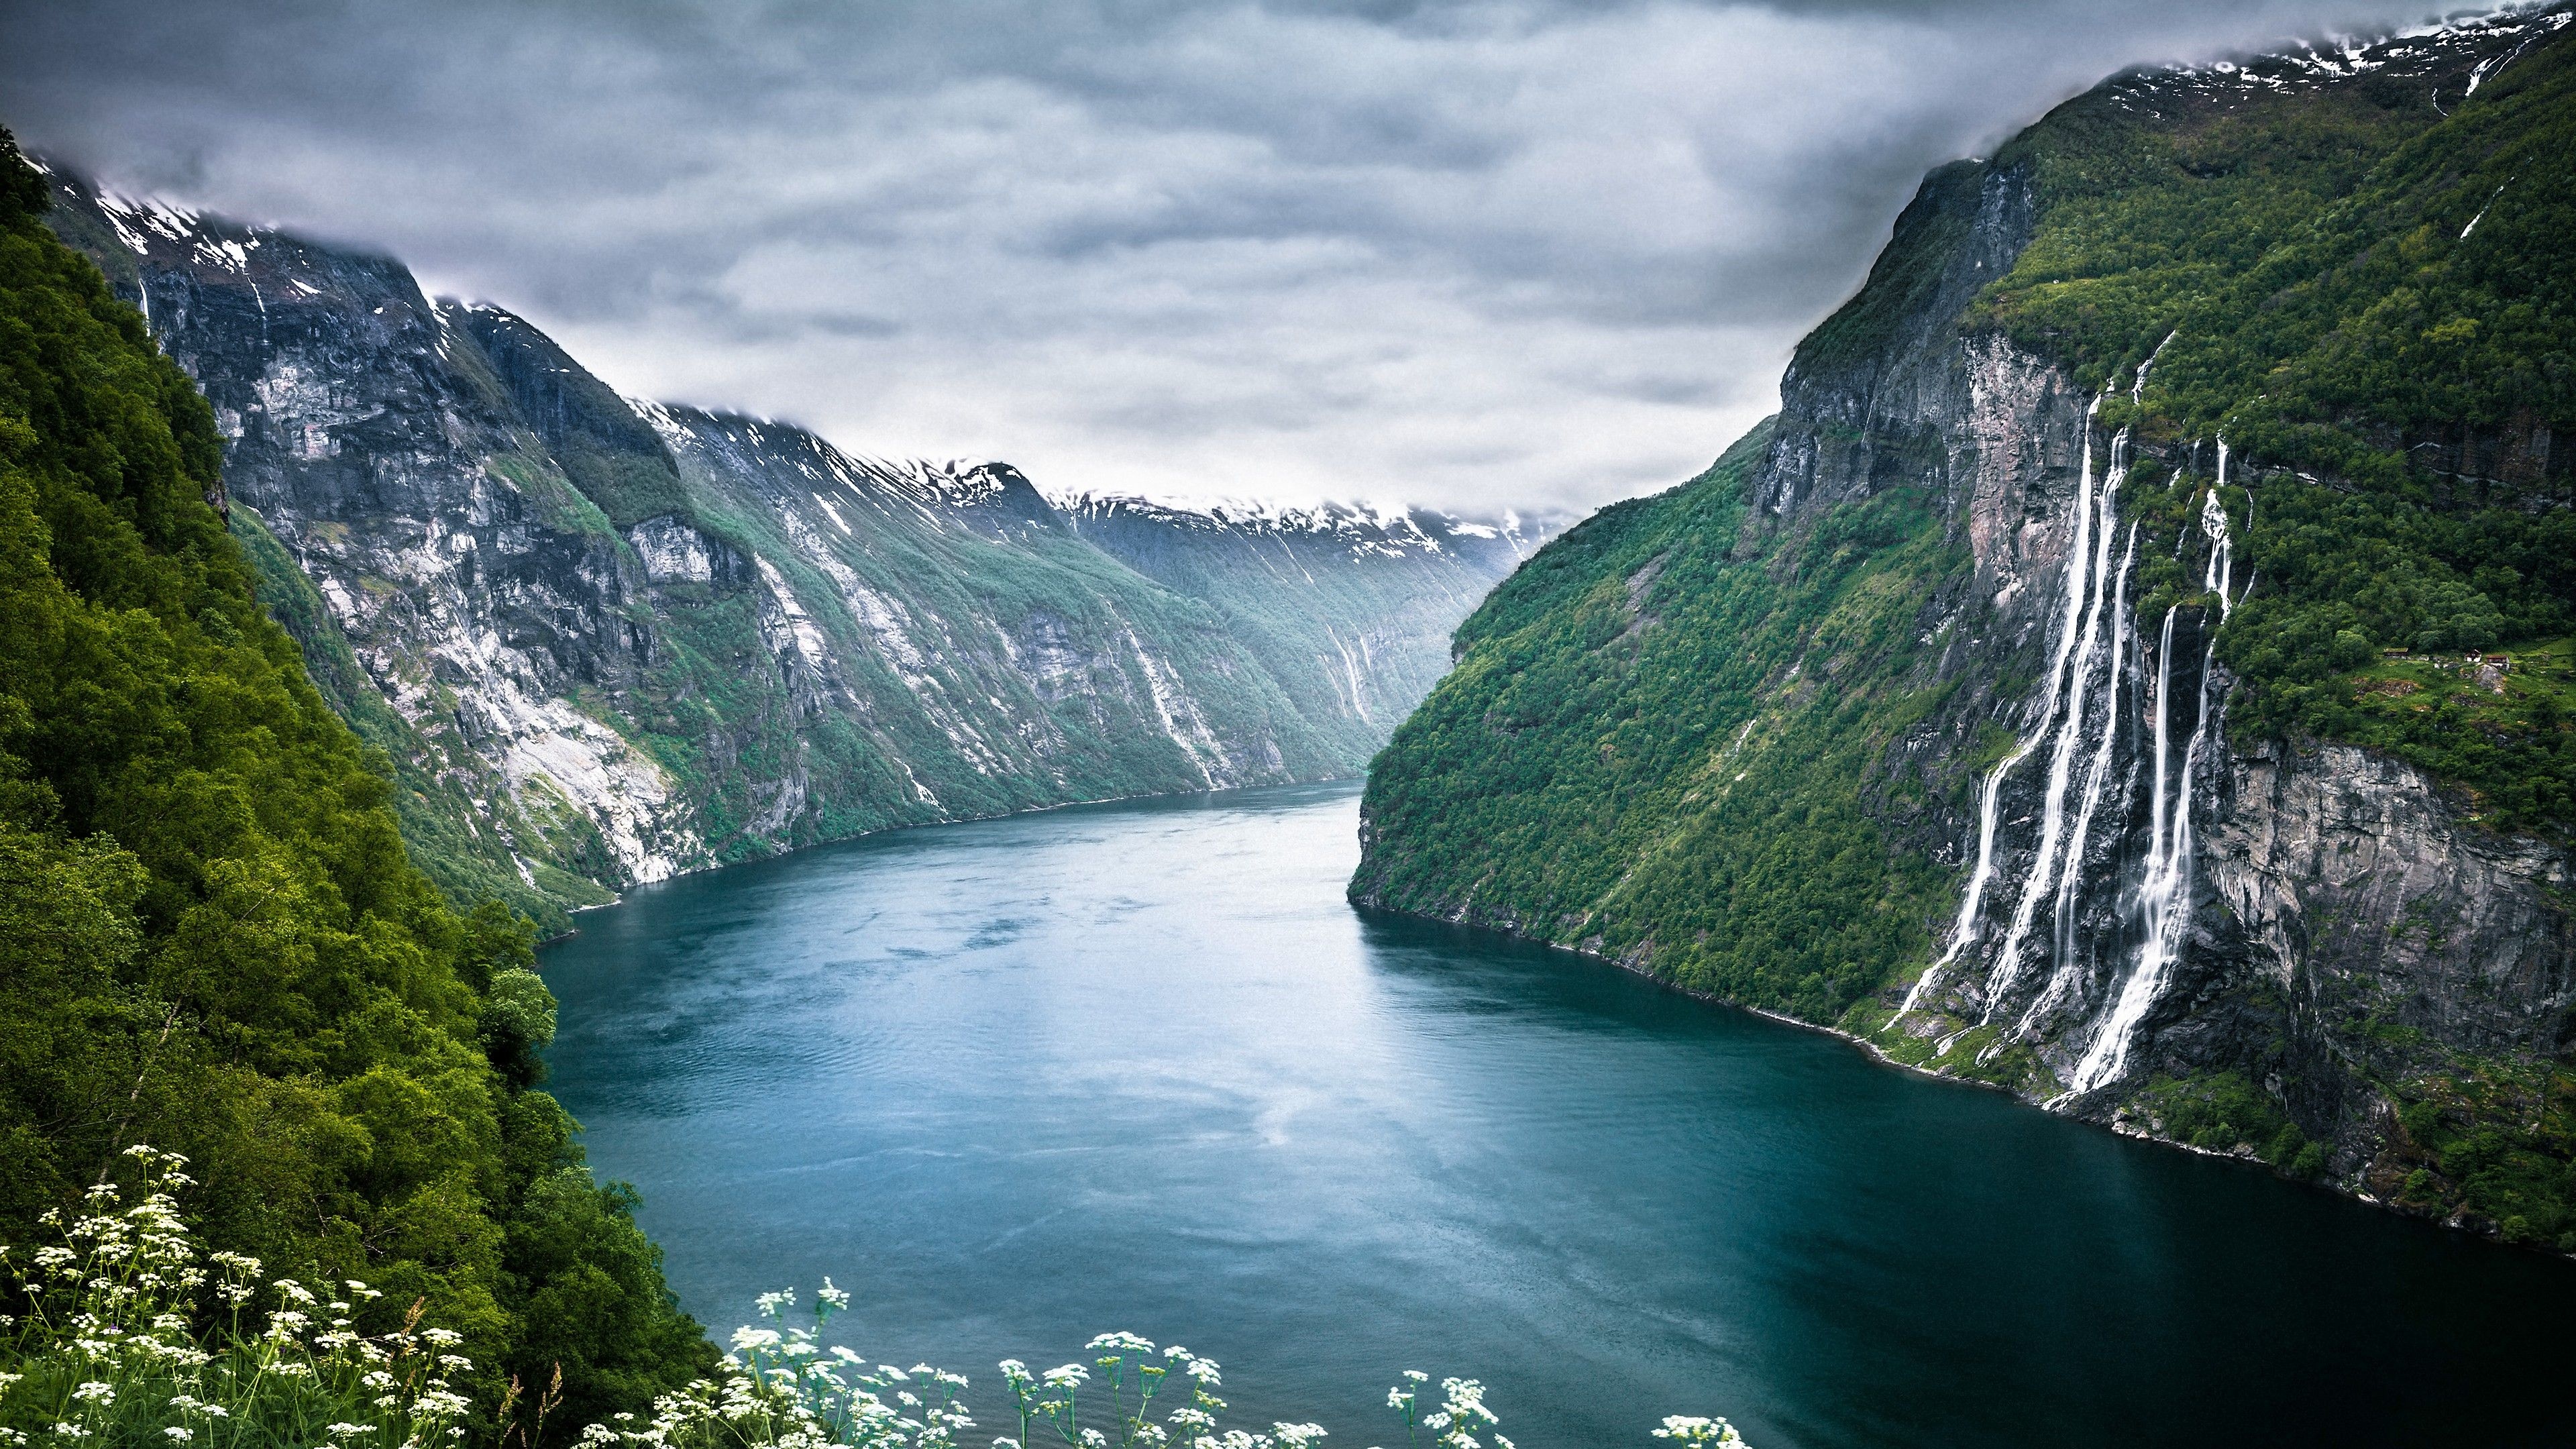 Norway scenery wallpapers, Aesthetic backgrounds, Breathtaking views, Picturesque nature, 3840x2160 4K Desktop